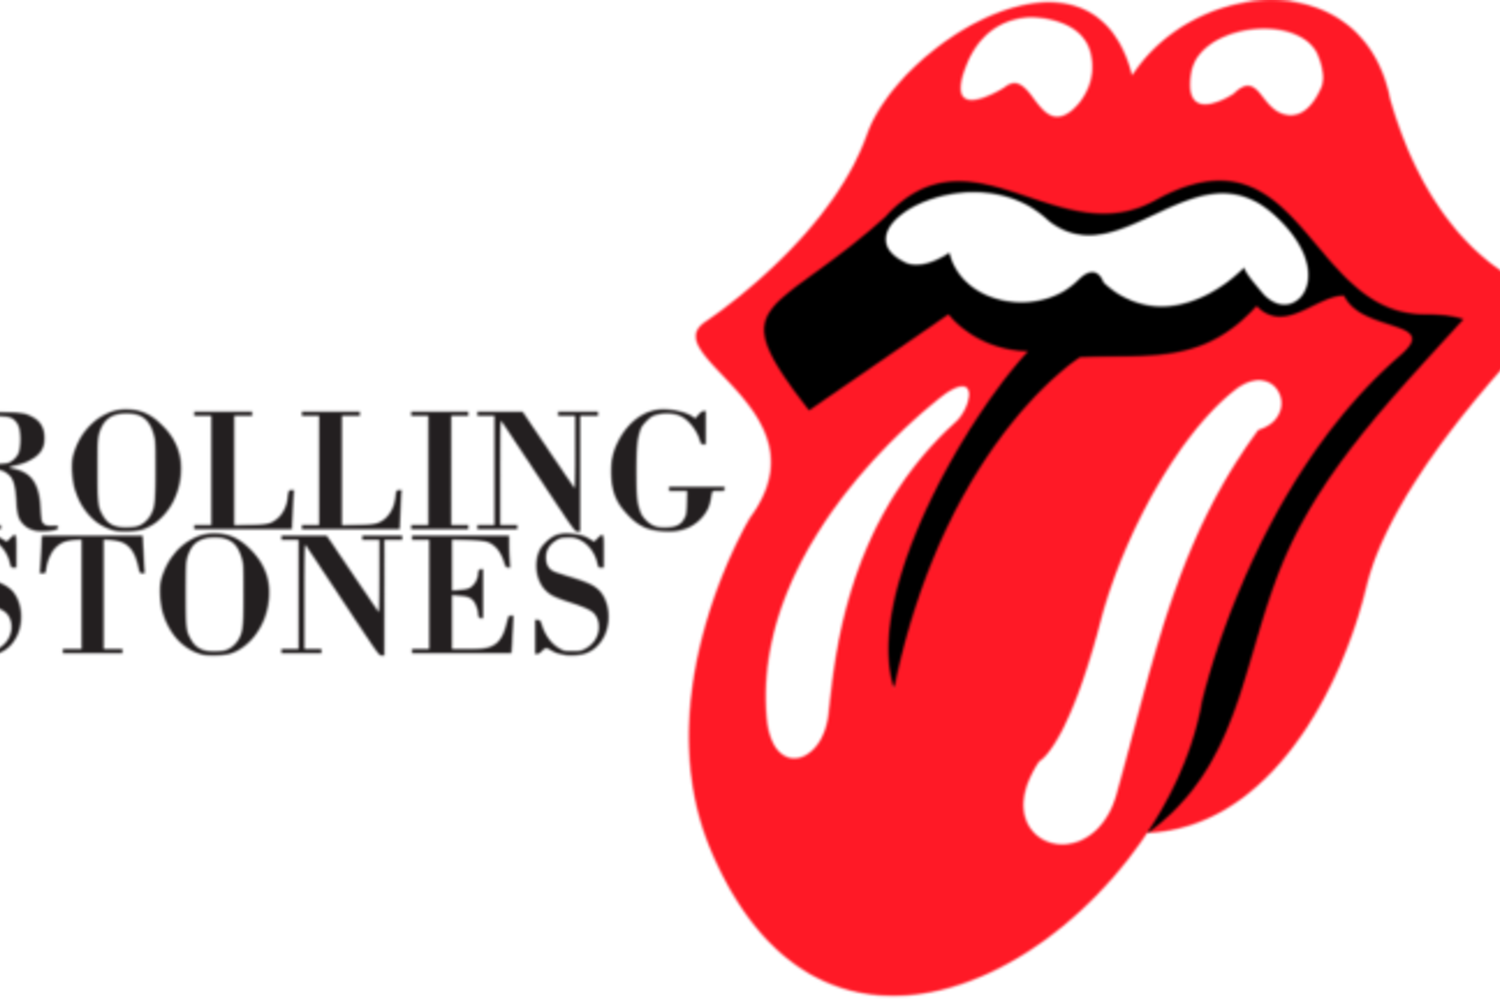 Rolling Stones Band Logo (1500x1000)